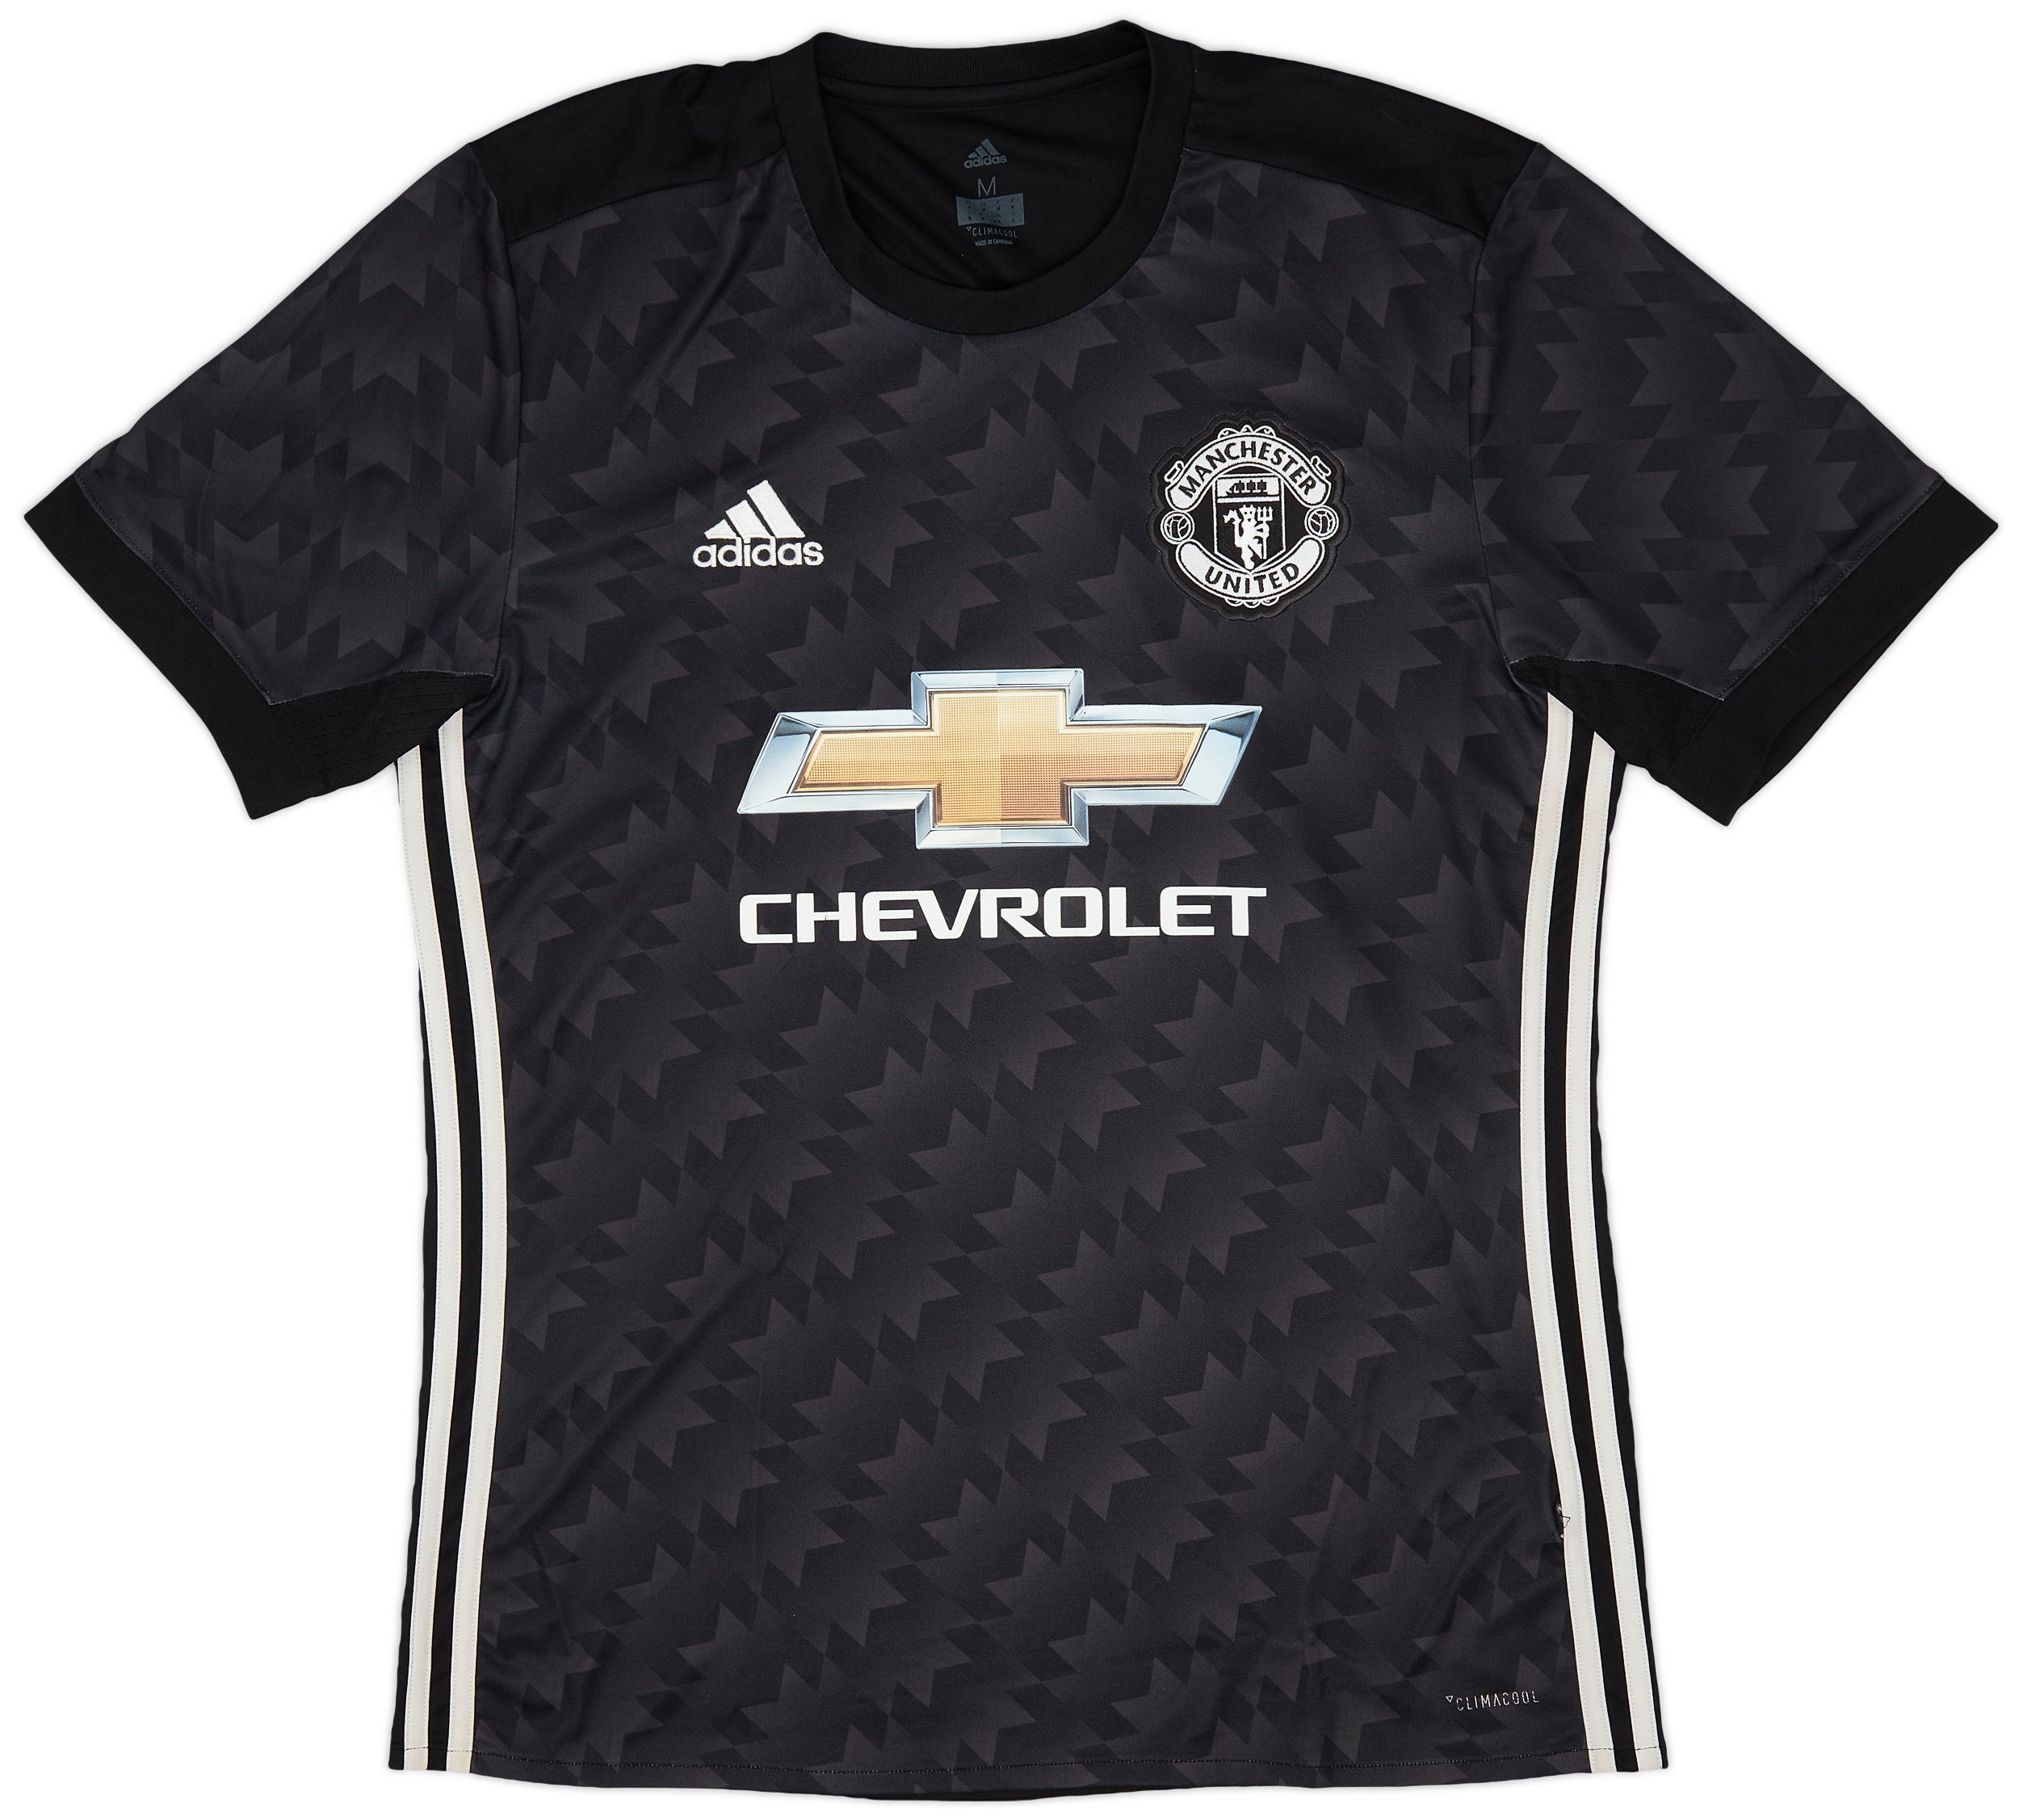 2017-18 Manchester United Away Shirt - 9/10 - ()